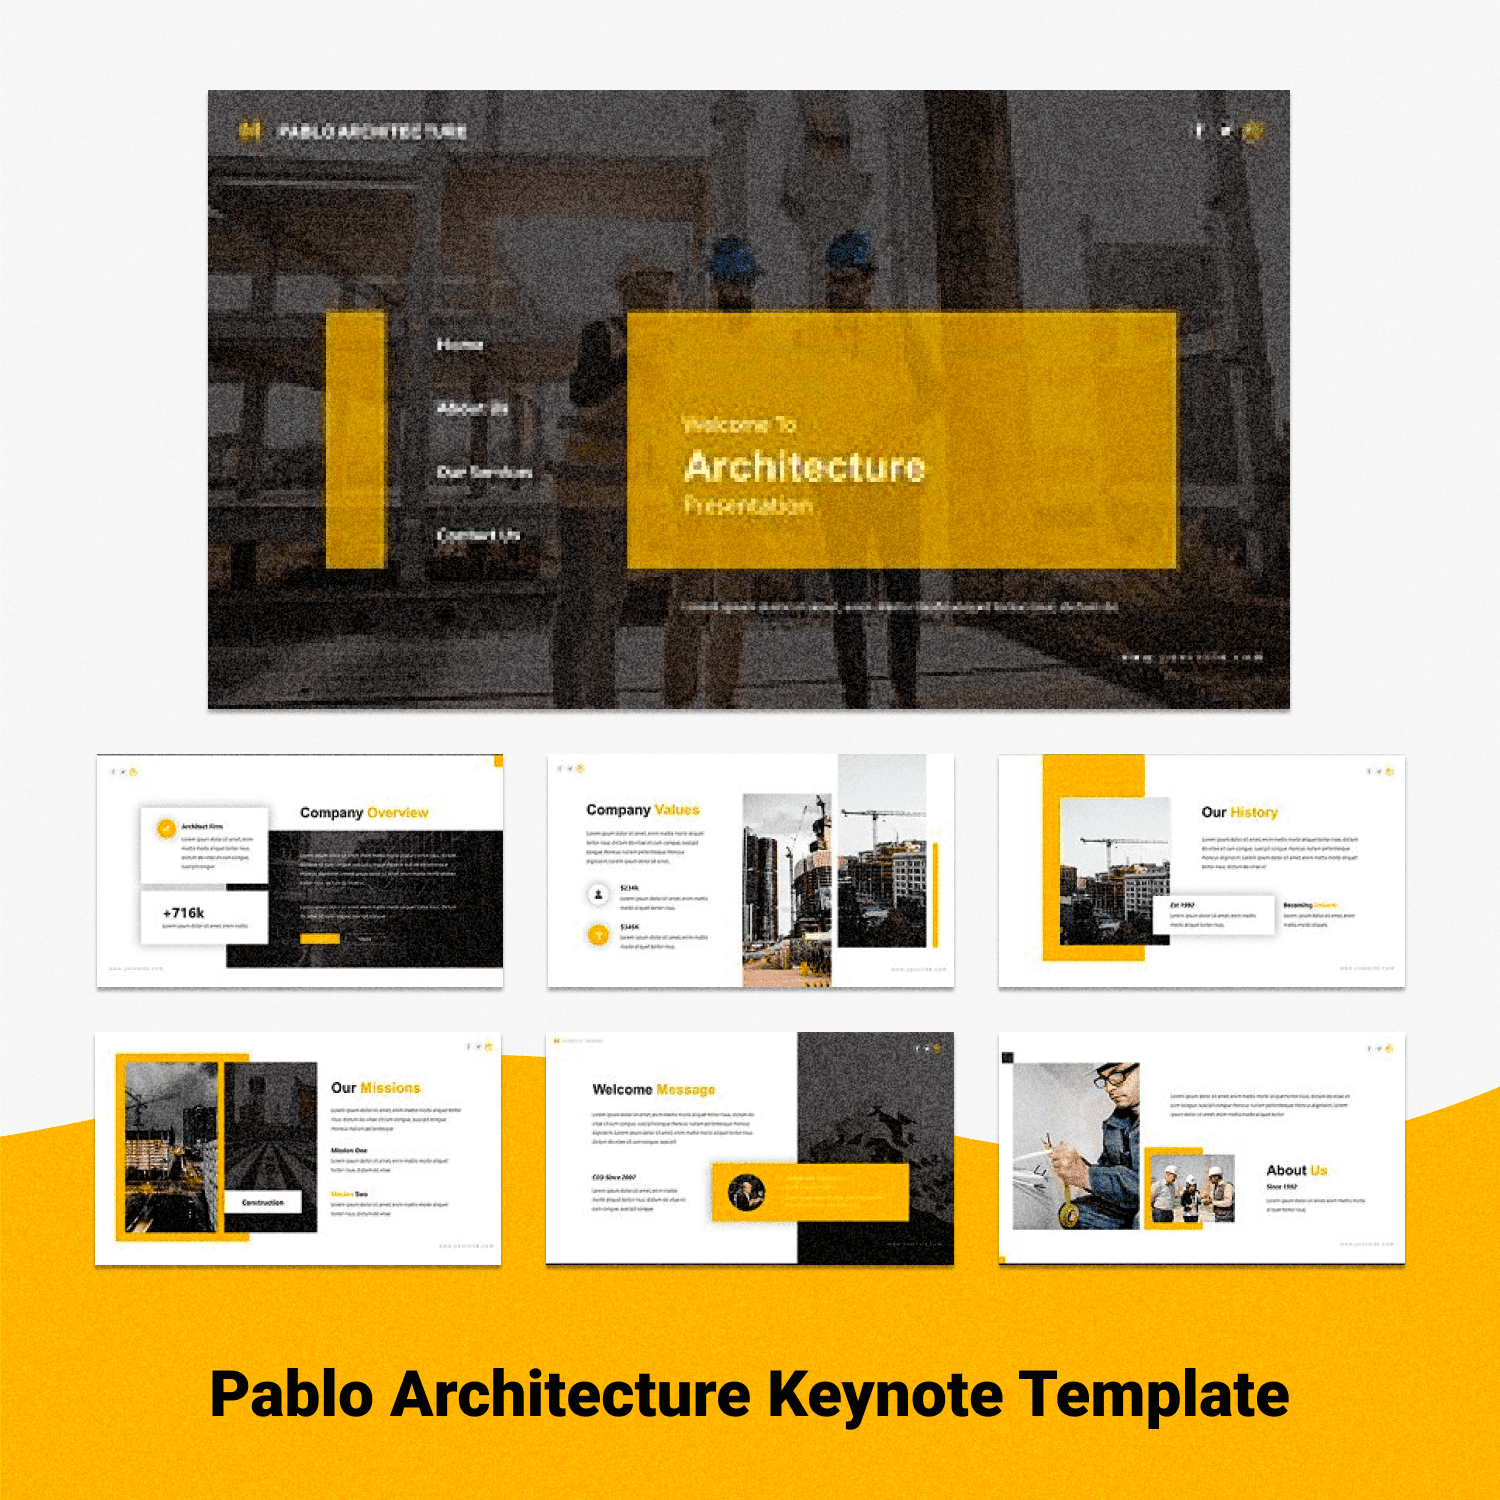 Pablo Architecture Keynote Template.